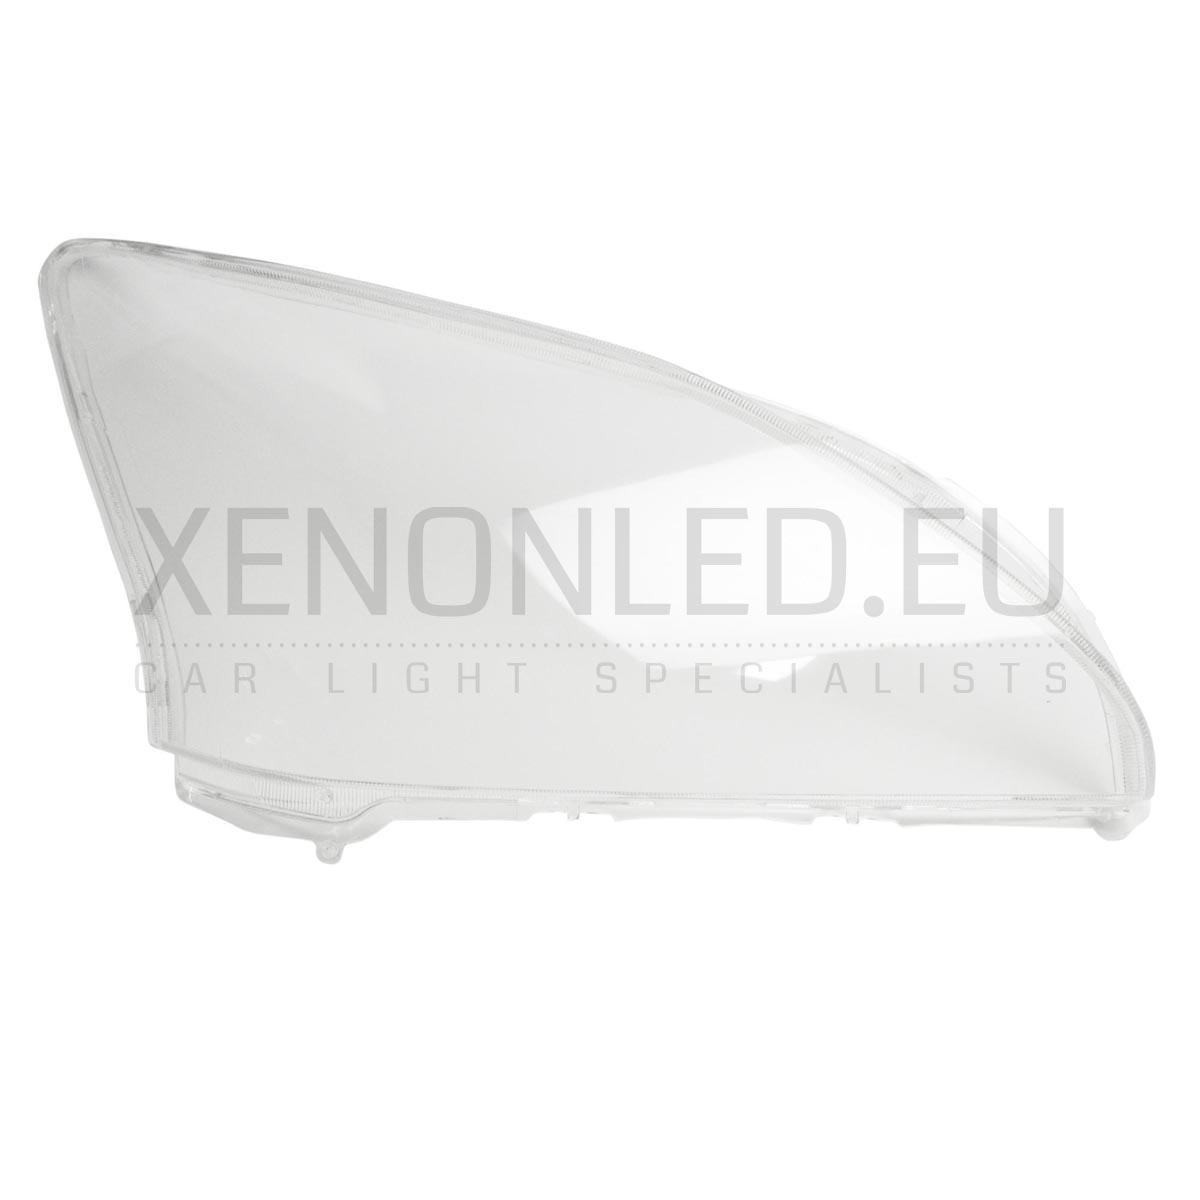 Lexus RX 2003 - 2009 Headlight Lens Cover Right Side - Xenonled.eu